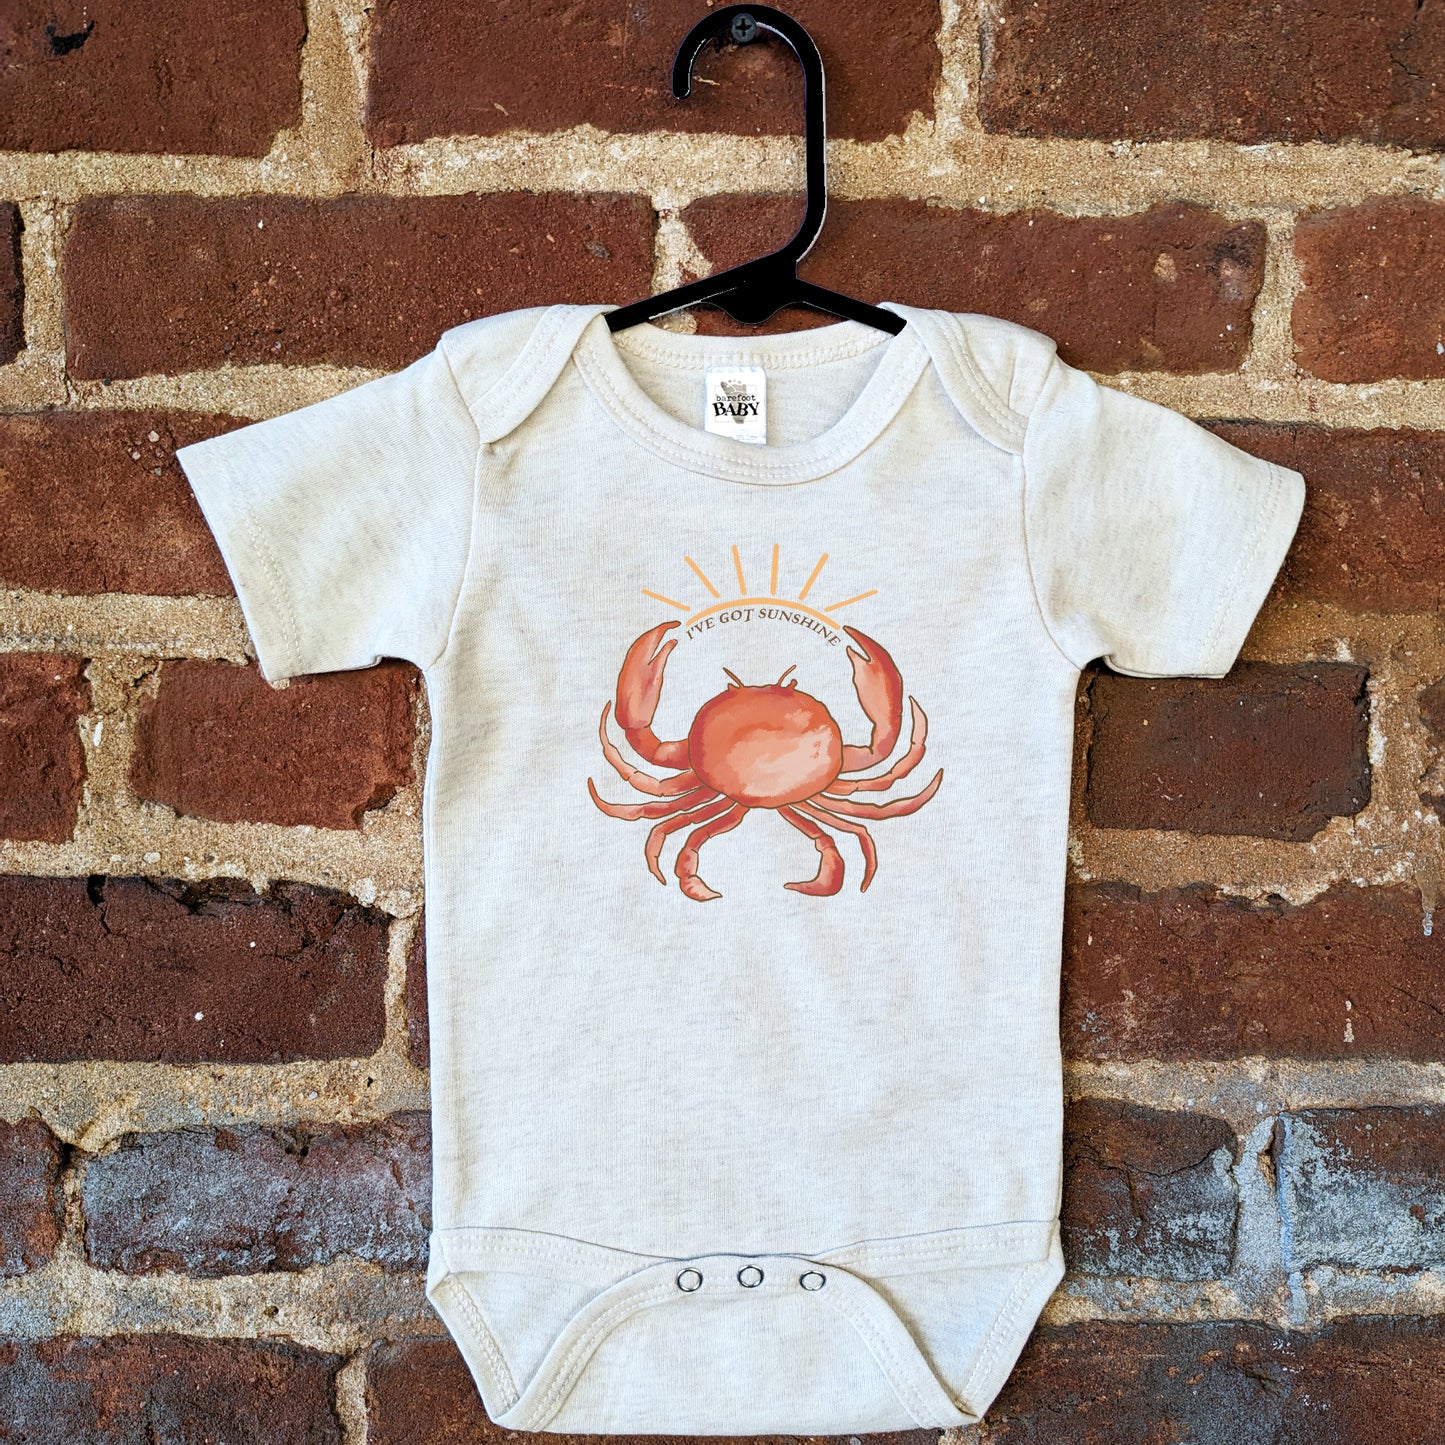 "I've got sunshine" Crab Ocean Beach Baby Body Suit